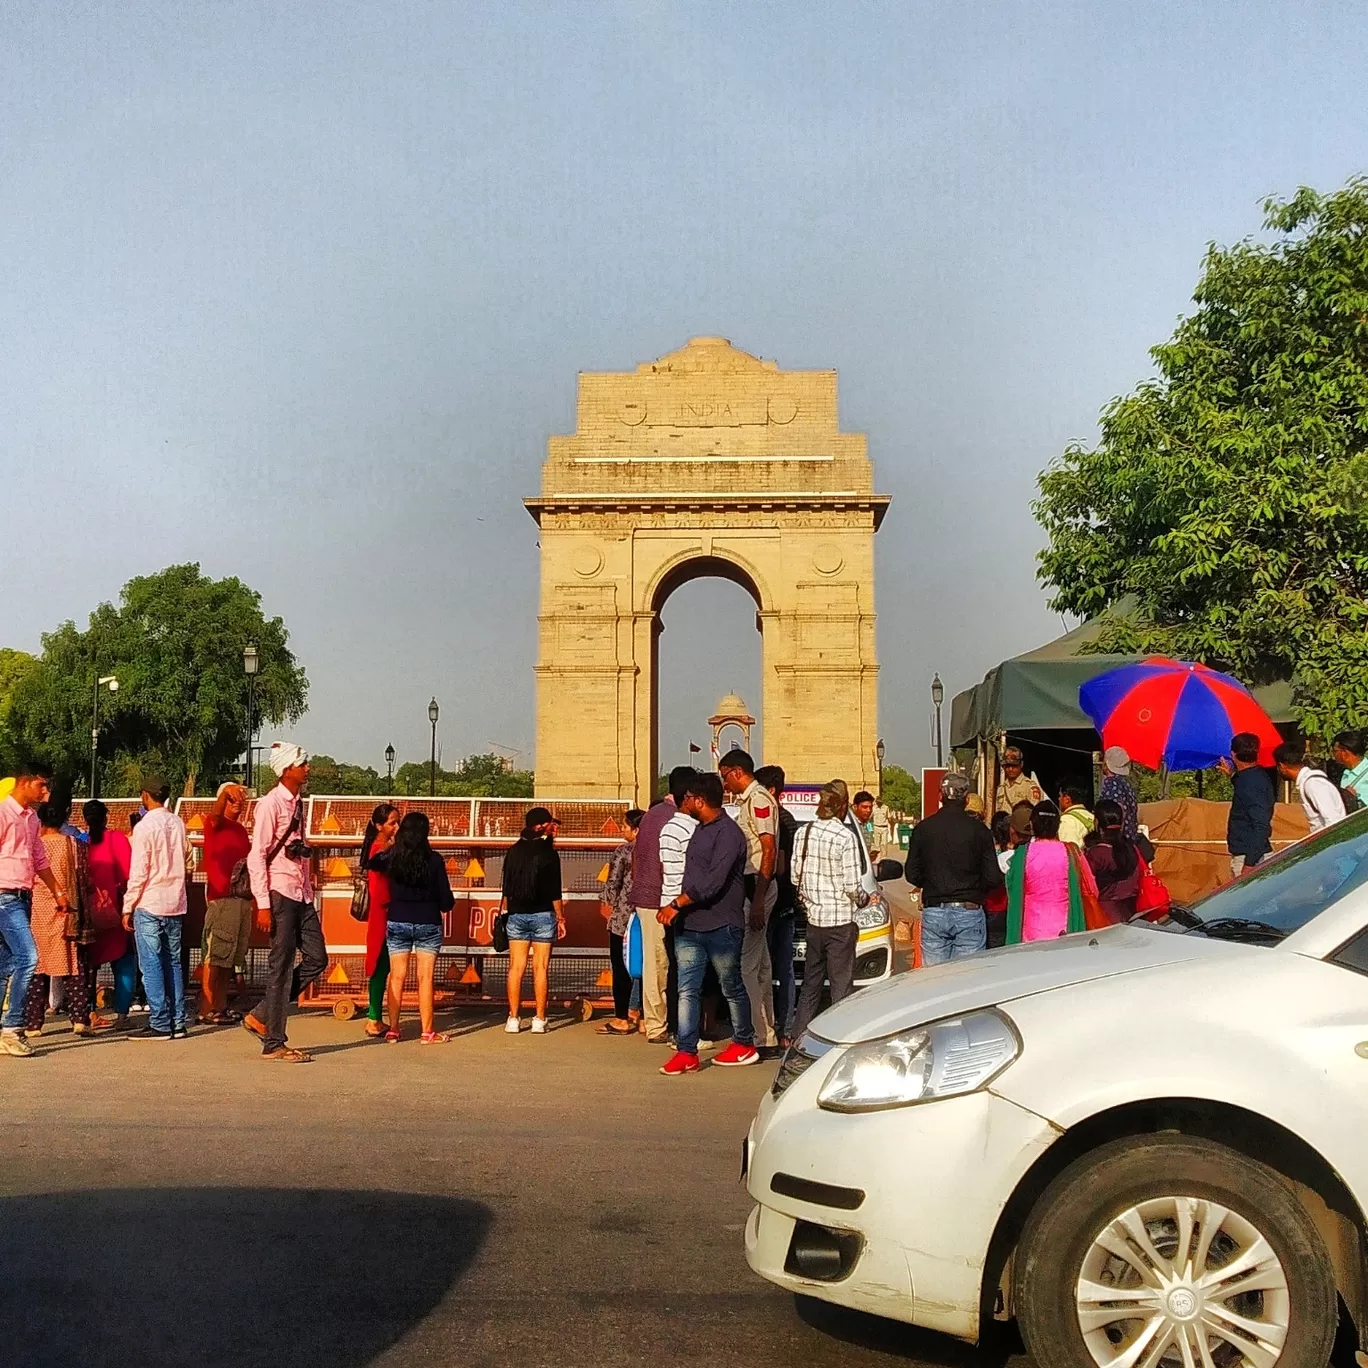 Photo of India Gate By shristi kumari